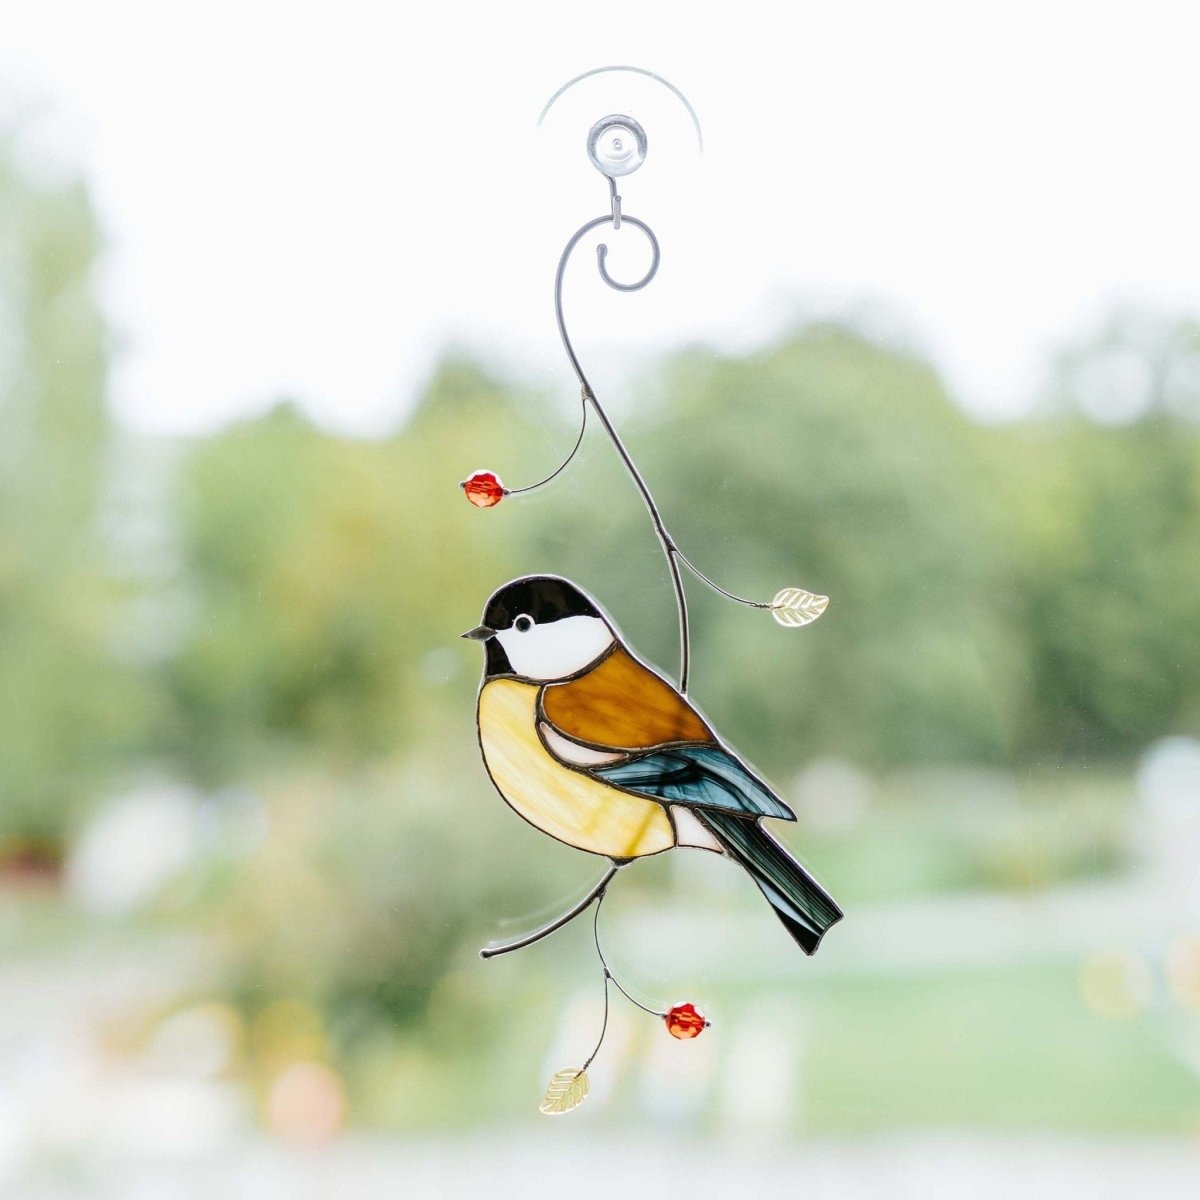 Stained glass Chickadee bird window hangings - Bird lover Gift